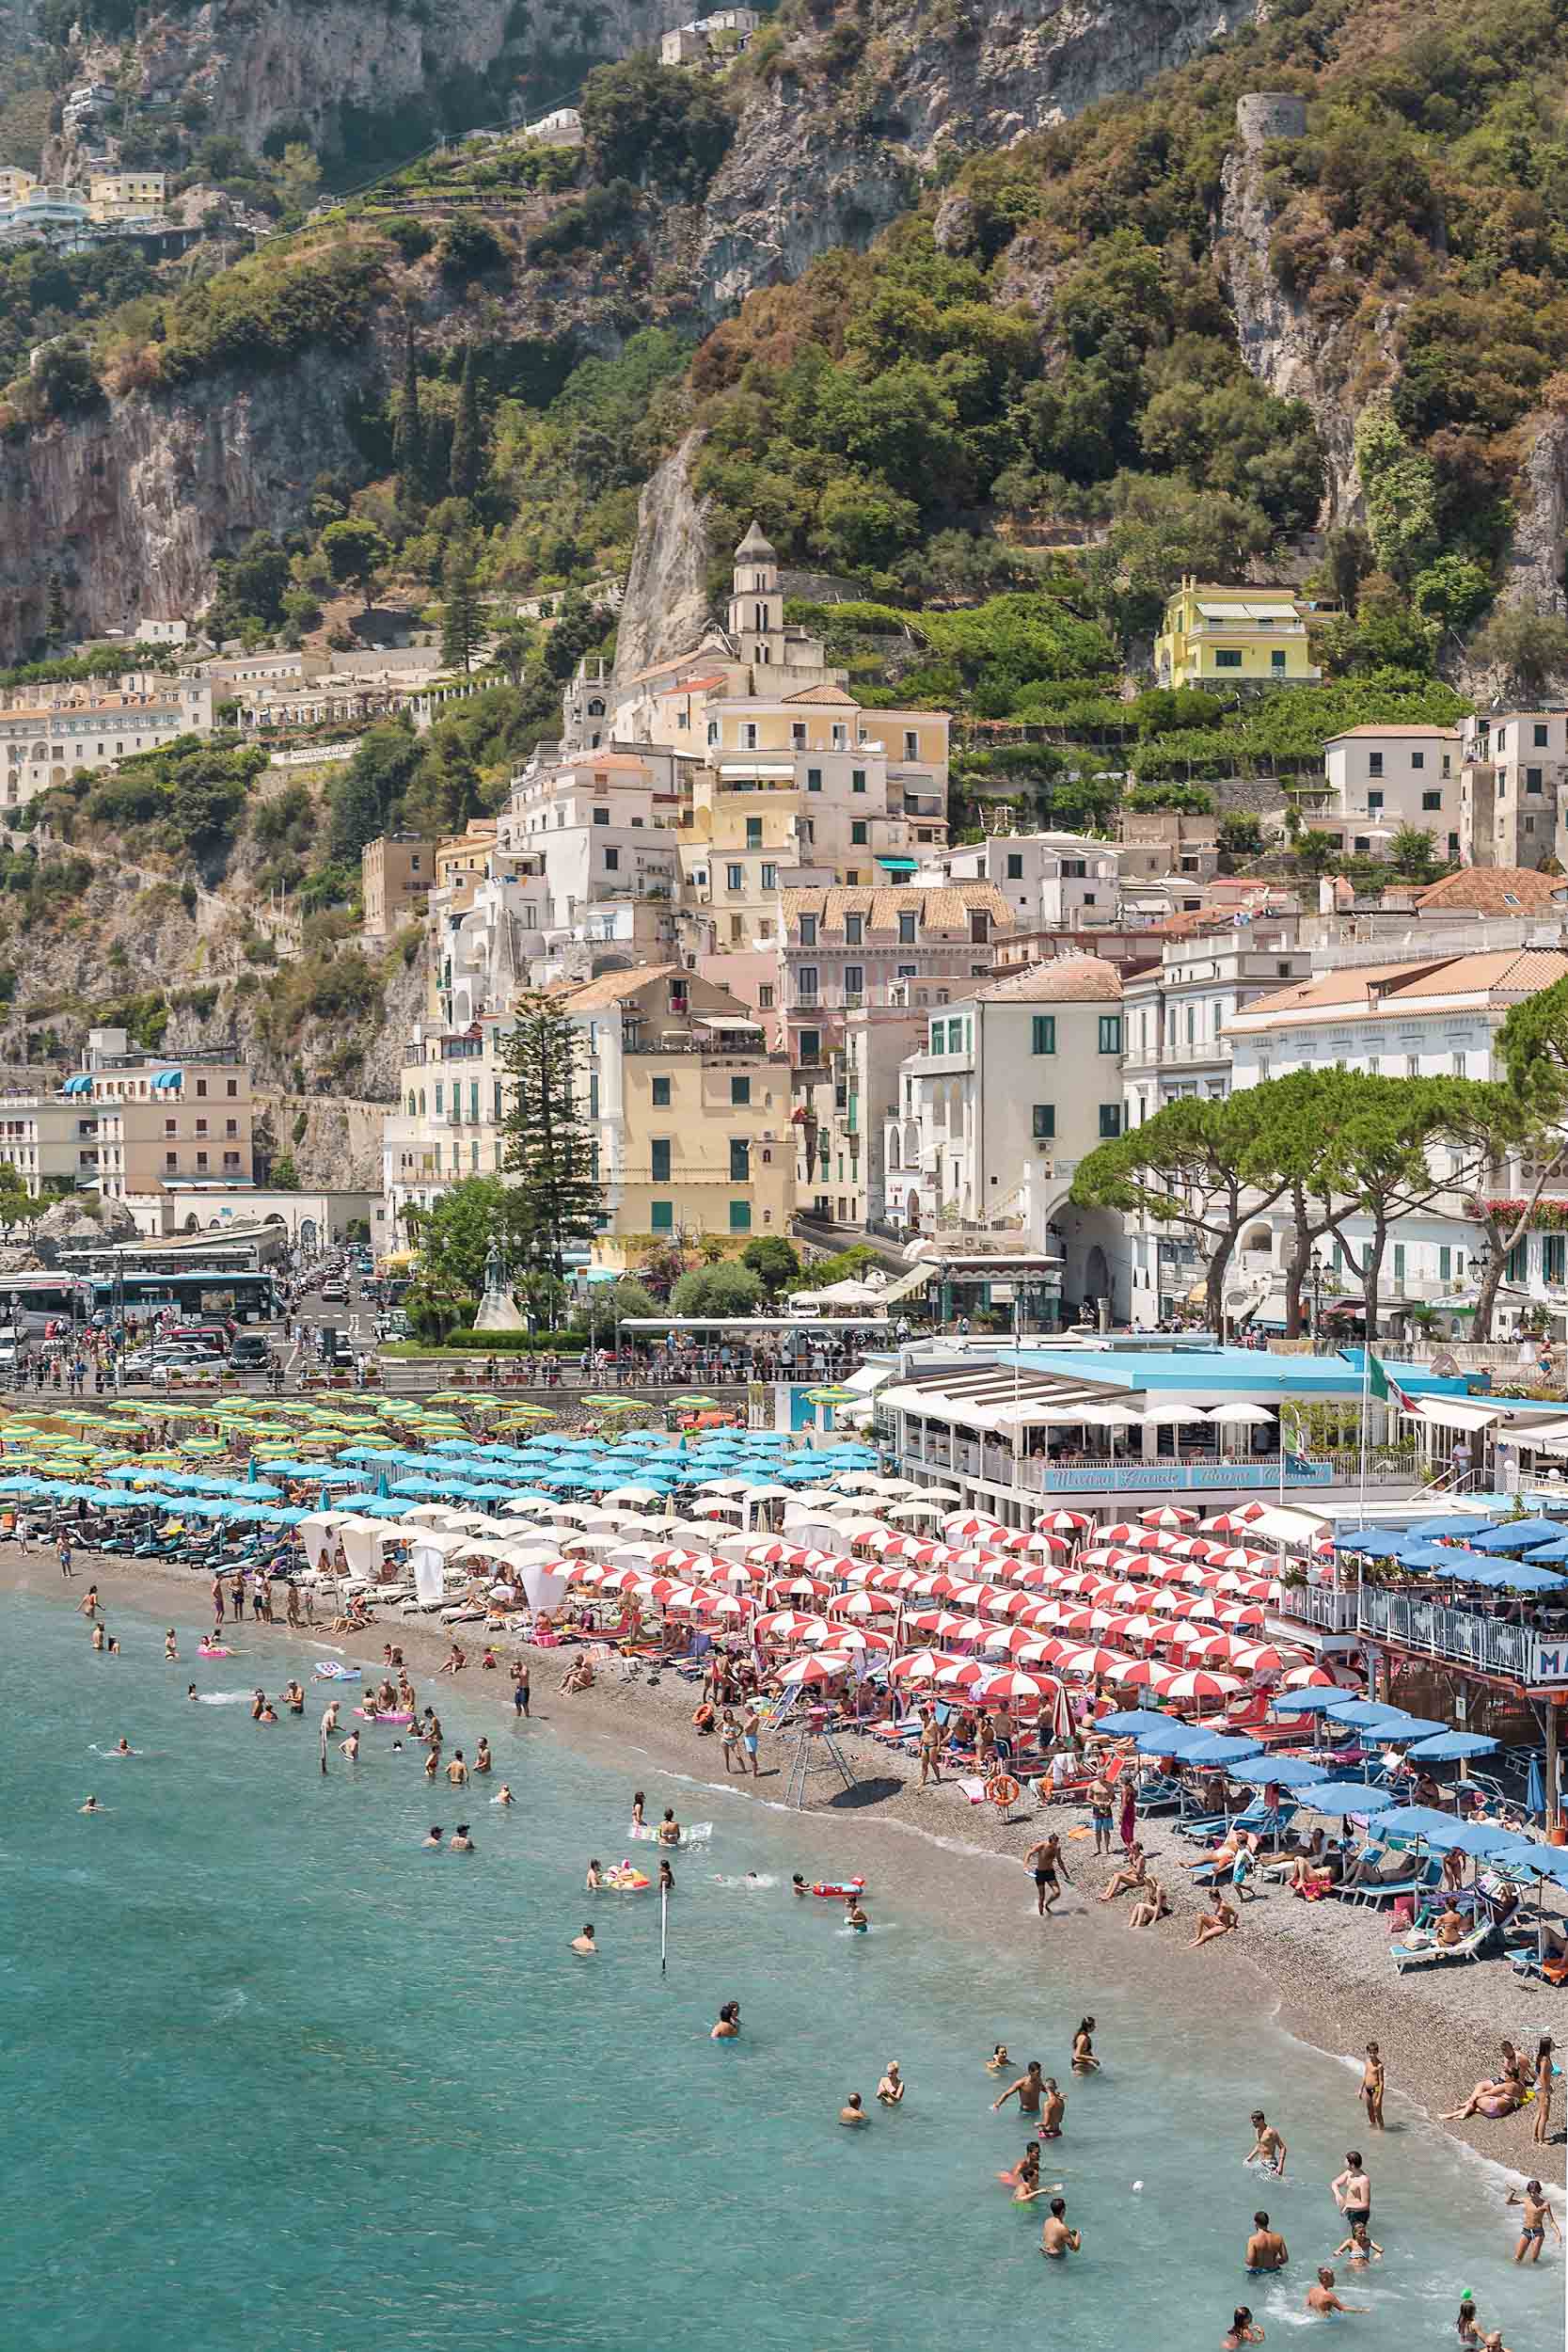 The beach in Amalfi, Italy